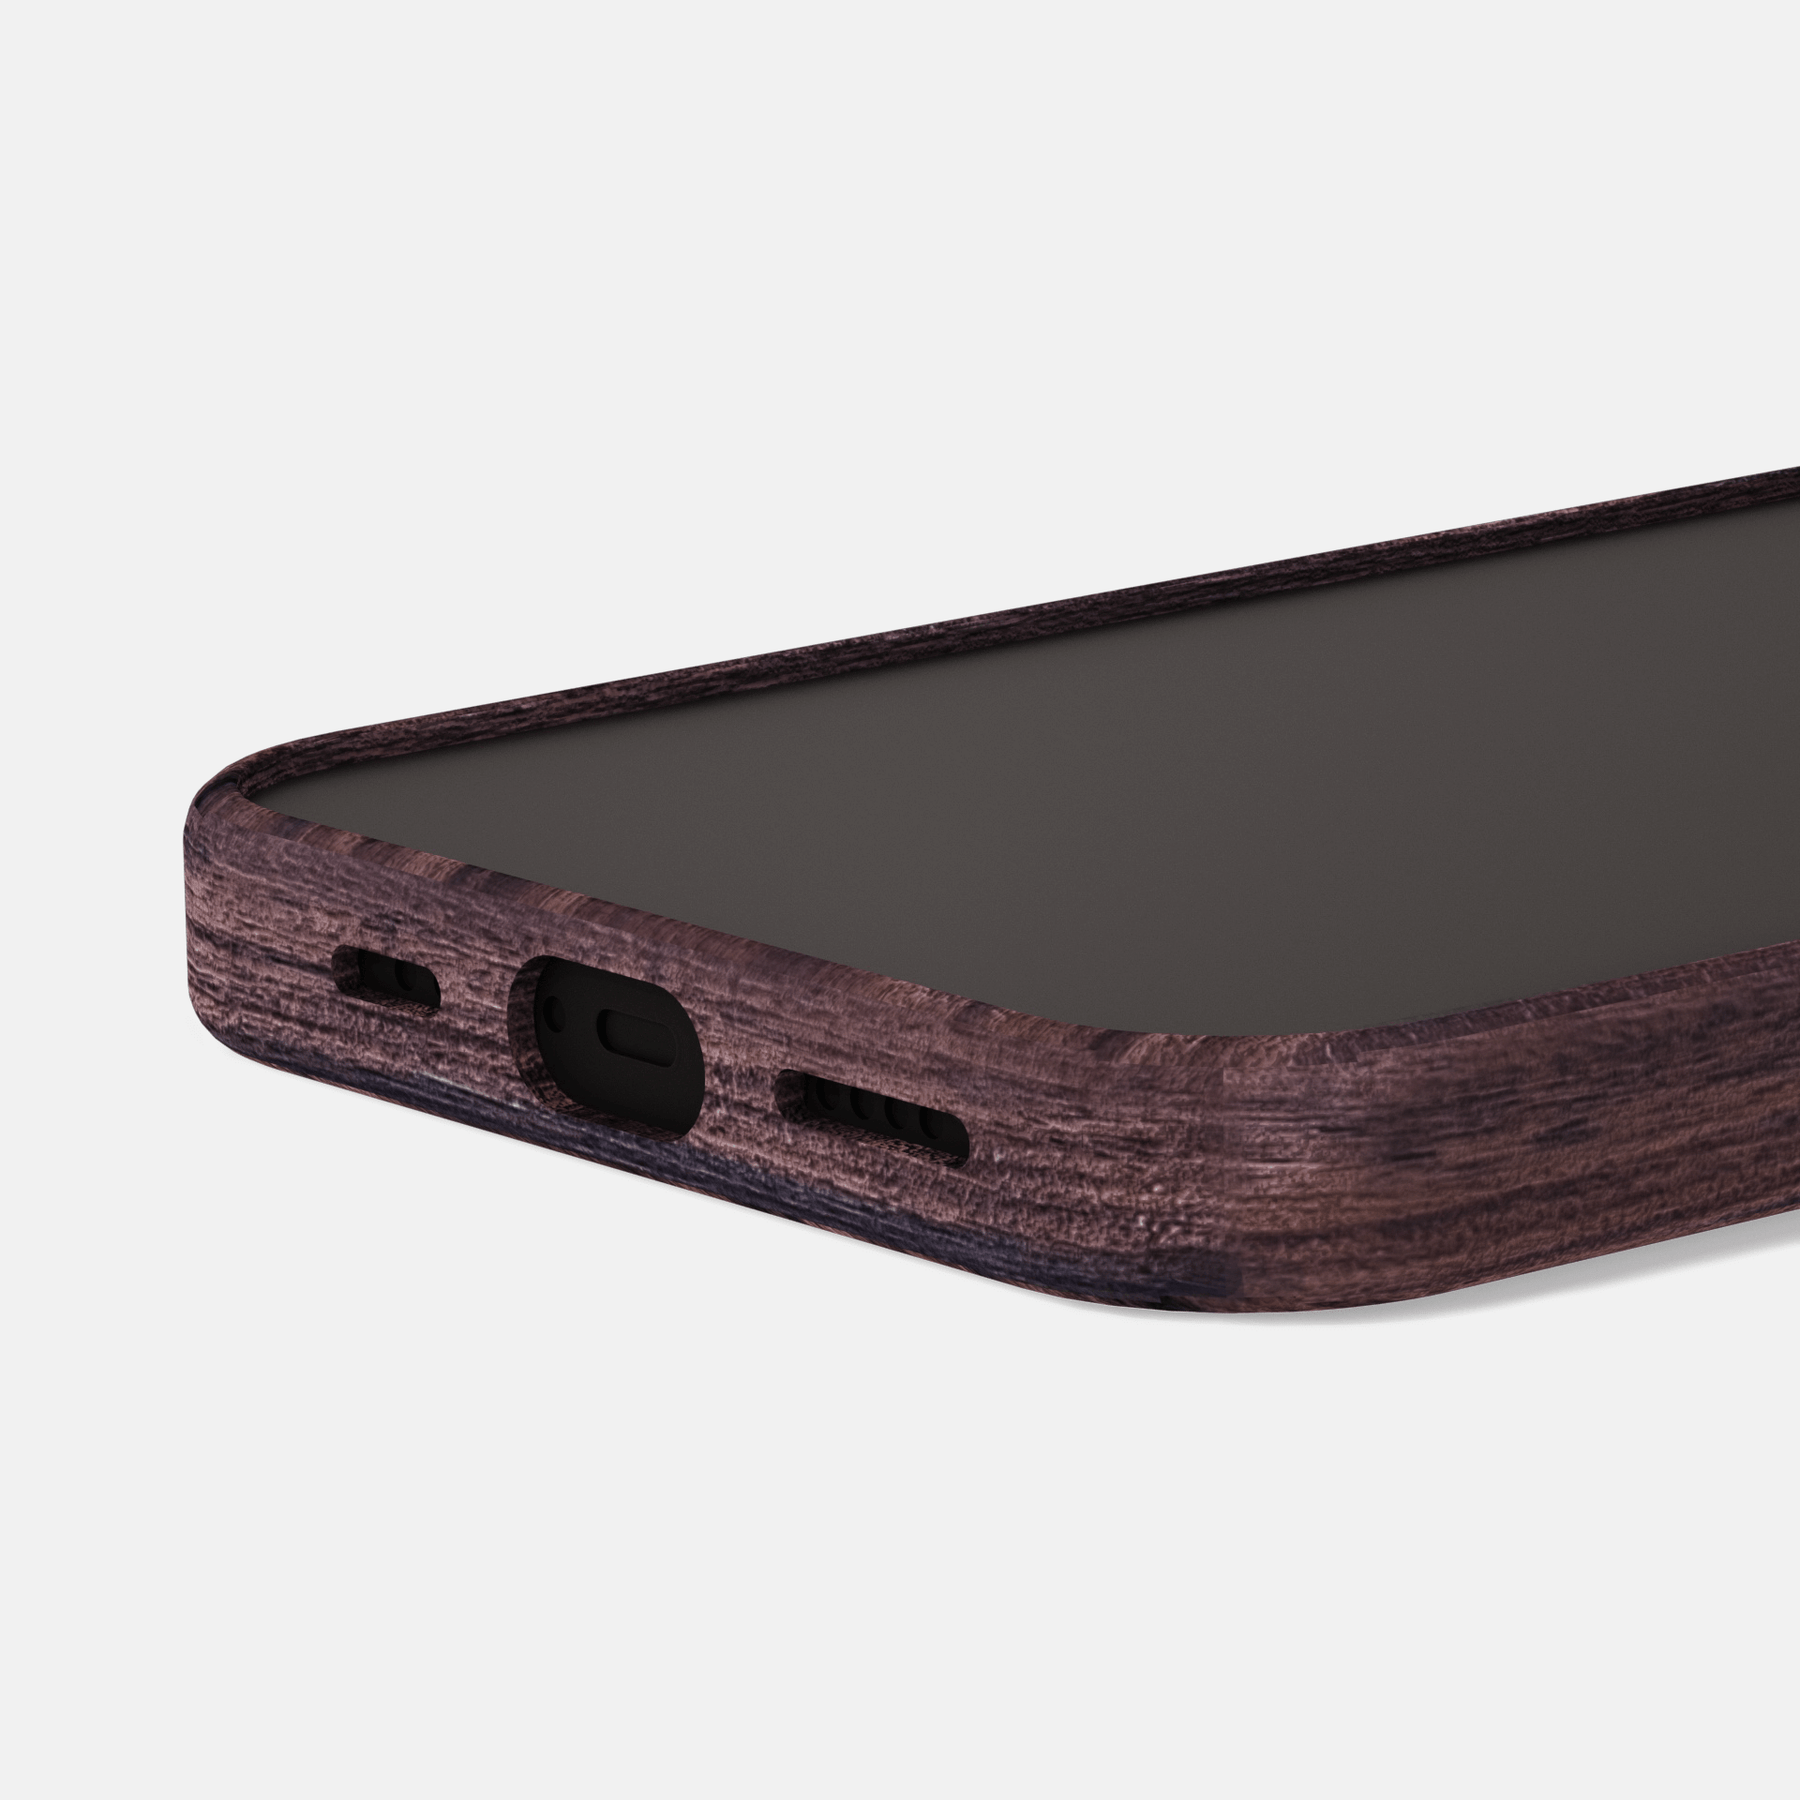 iPhone 14 Pro Wood Phone Case